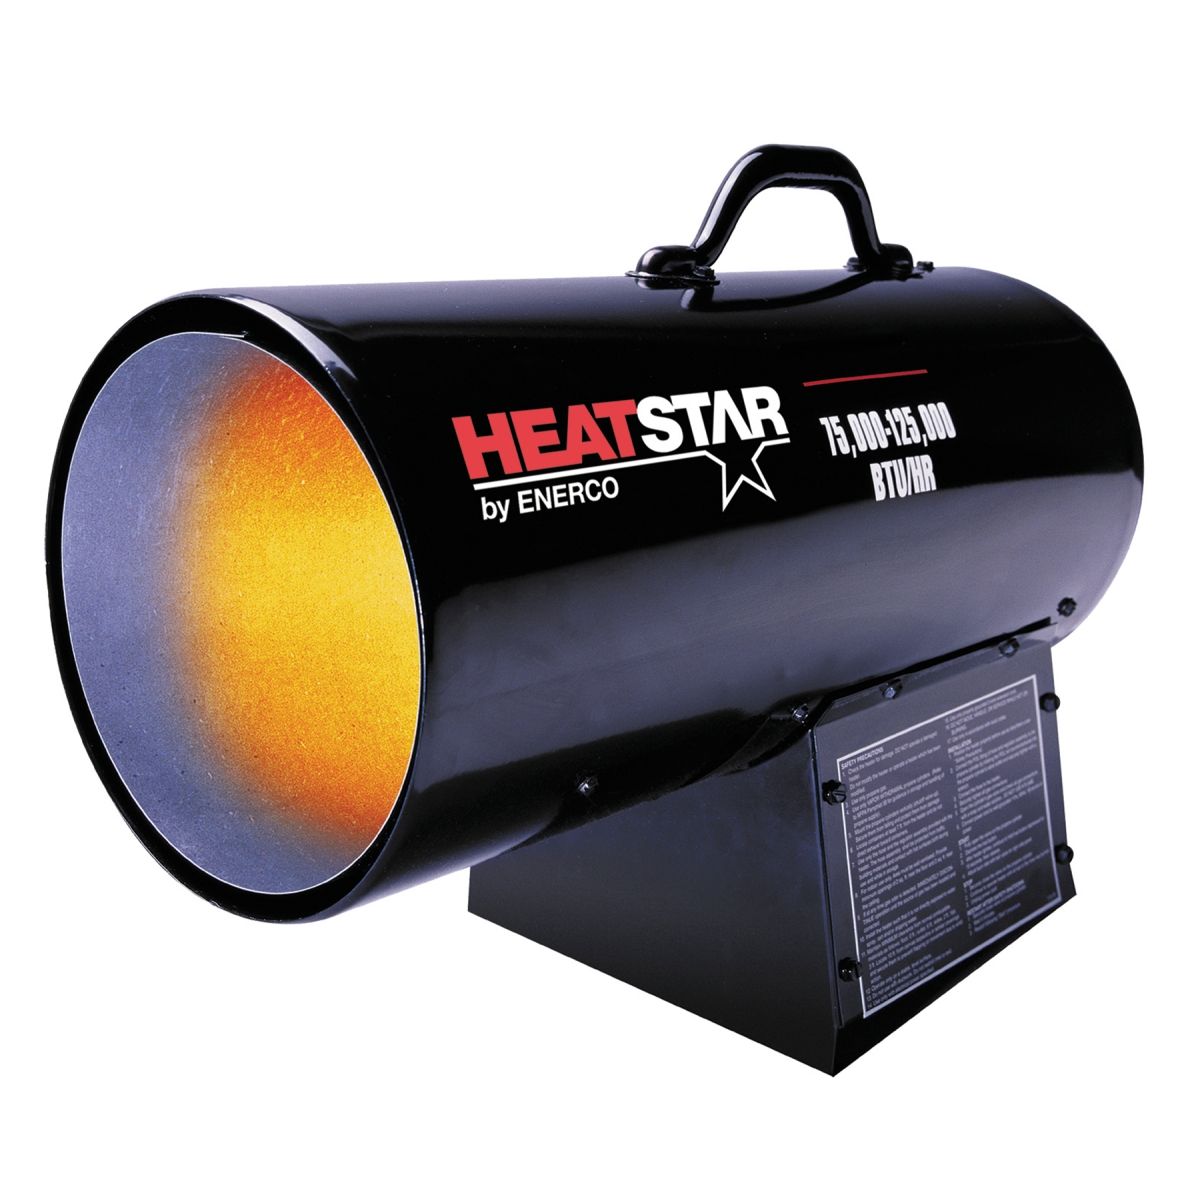 Portable Propane Heater, 75-125,000 BTU HR